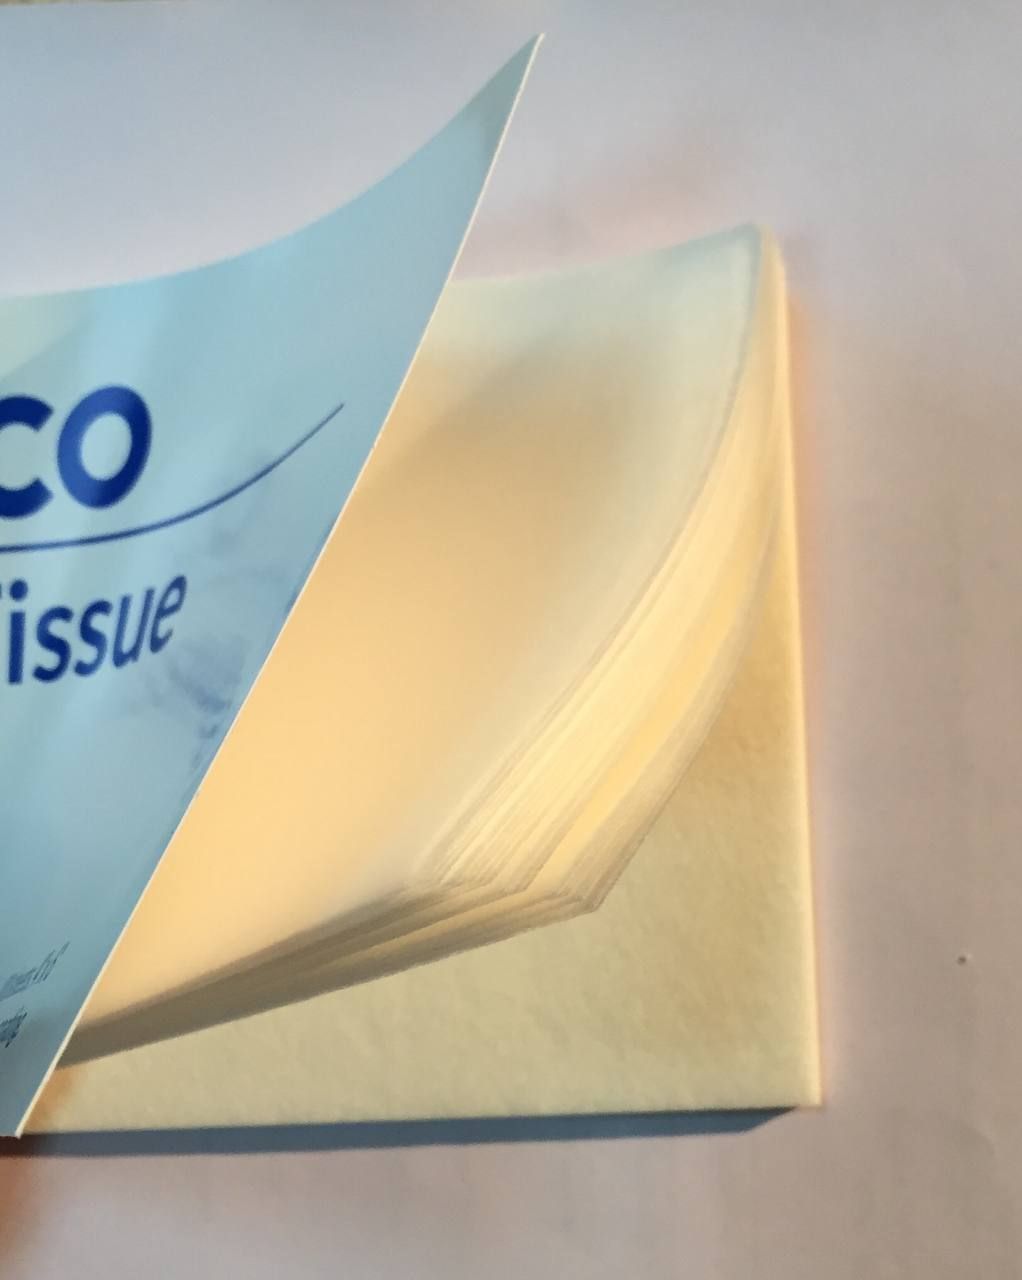 Салфетки для чистки линз ROSCO Lens Tissue Book of 100 Sheets (100 шт.)